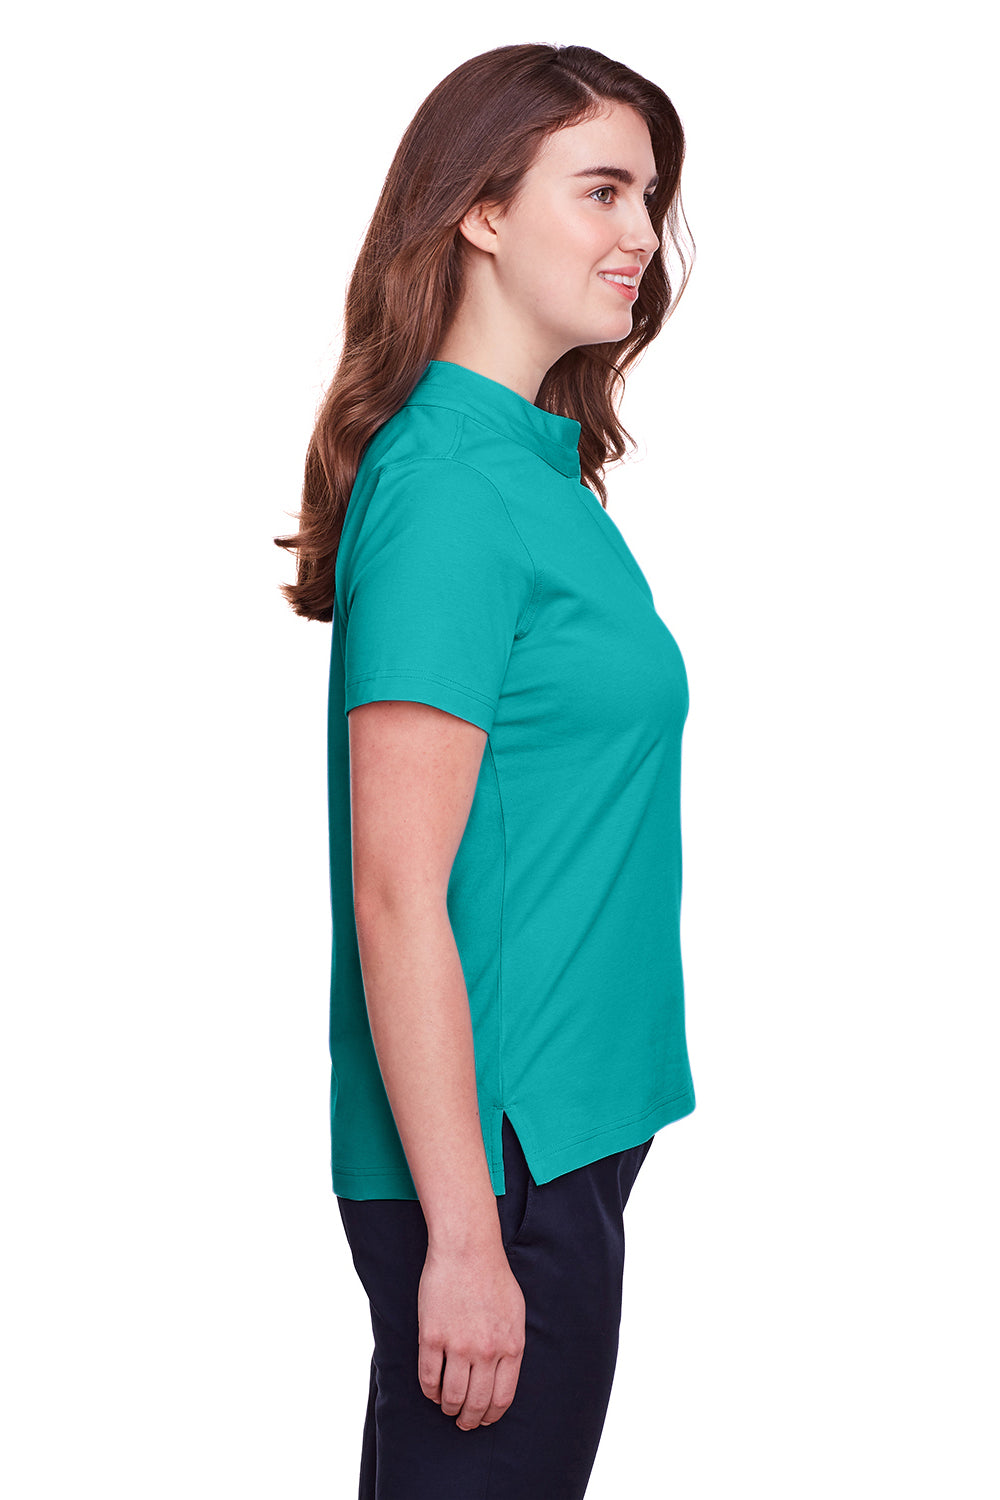 UltraClub UC105W Womens Lakeshore Performance Moisture Wicking Short Sleeve Polo Shirt Jade Green Side